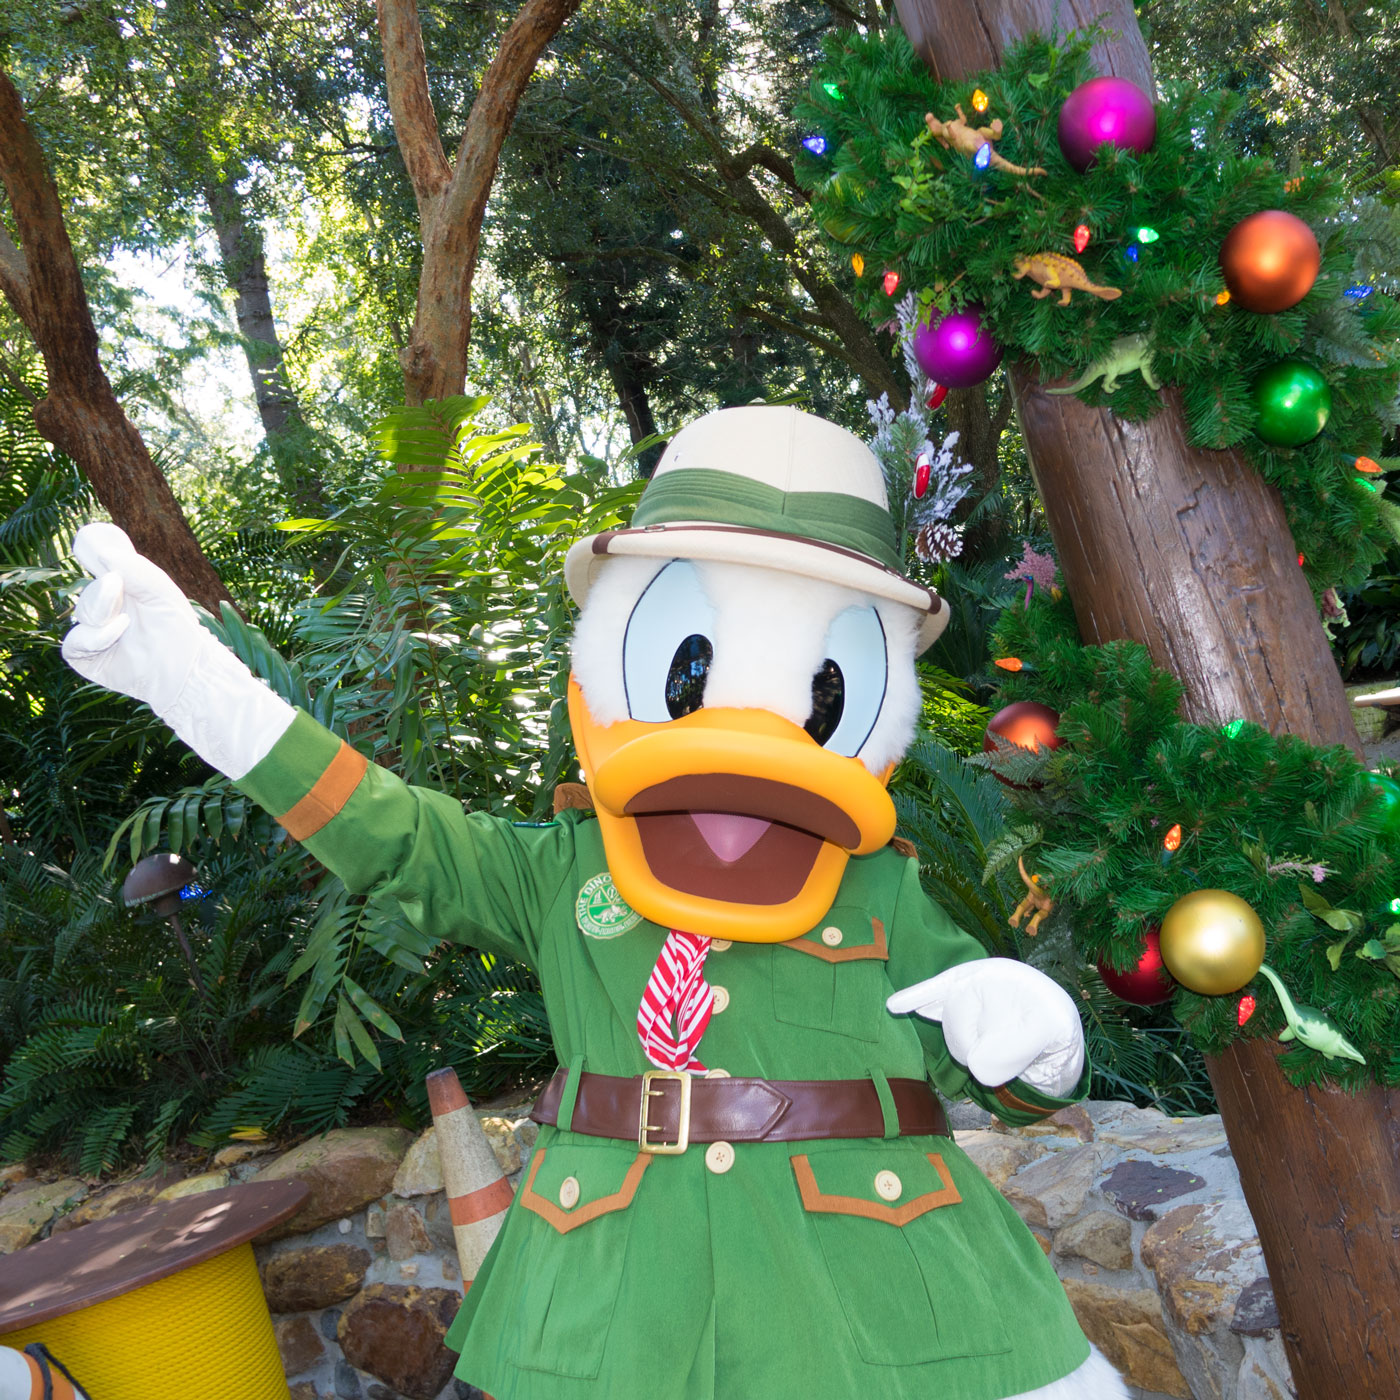 Donald Duck in Christmas attire at Disney's Animal Kingdom